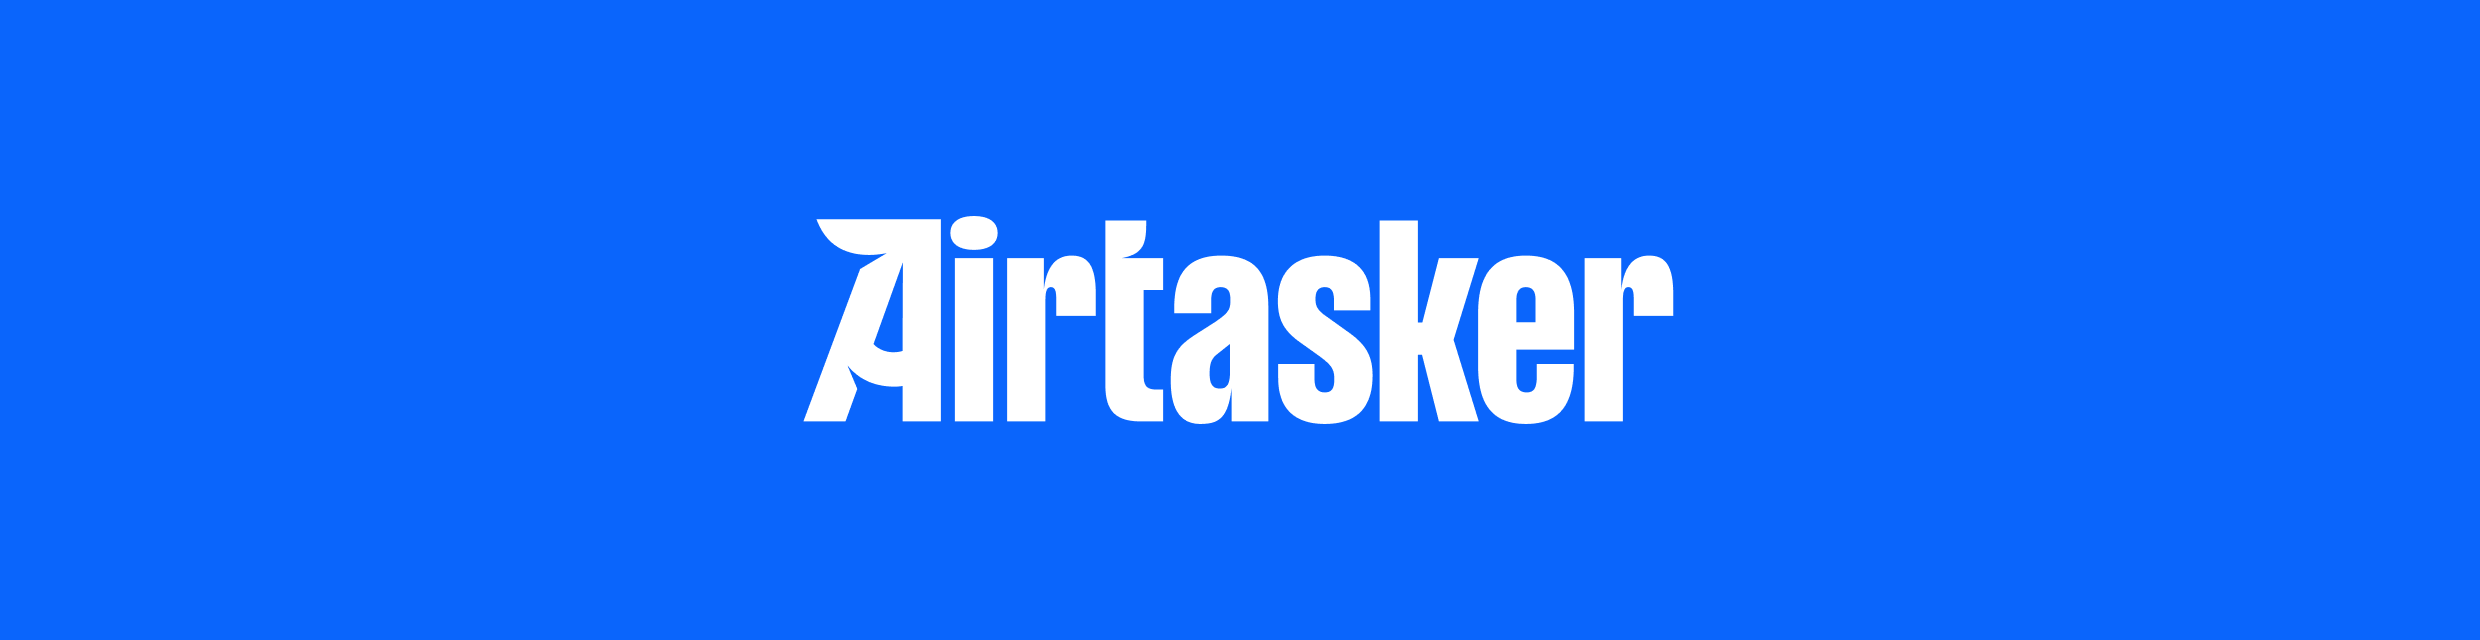 Airtasker Logotype on Airtasker Blue